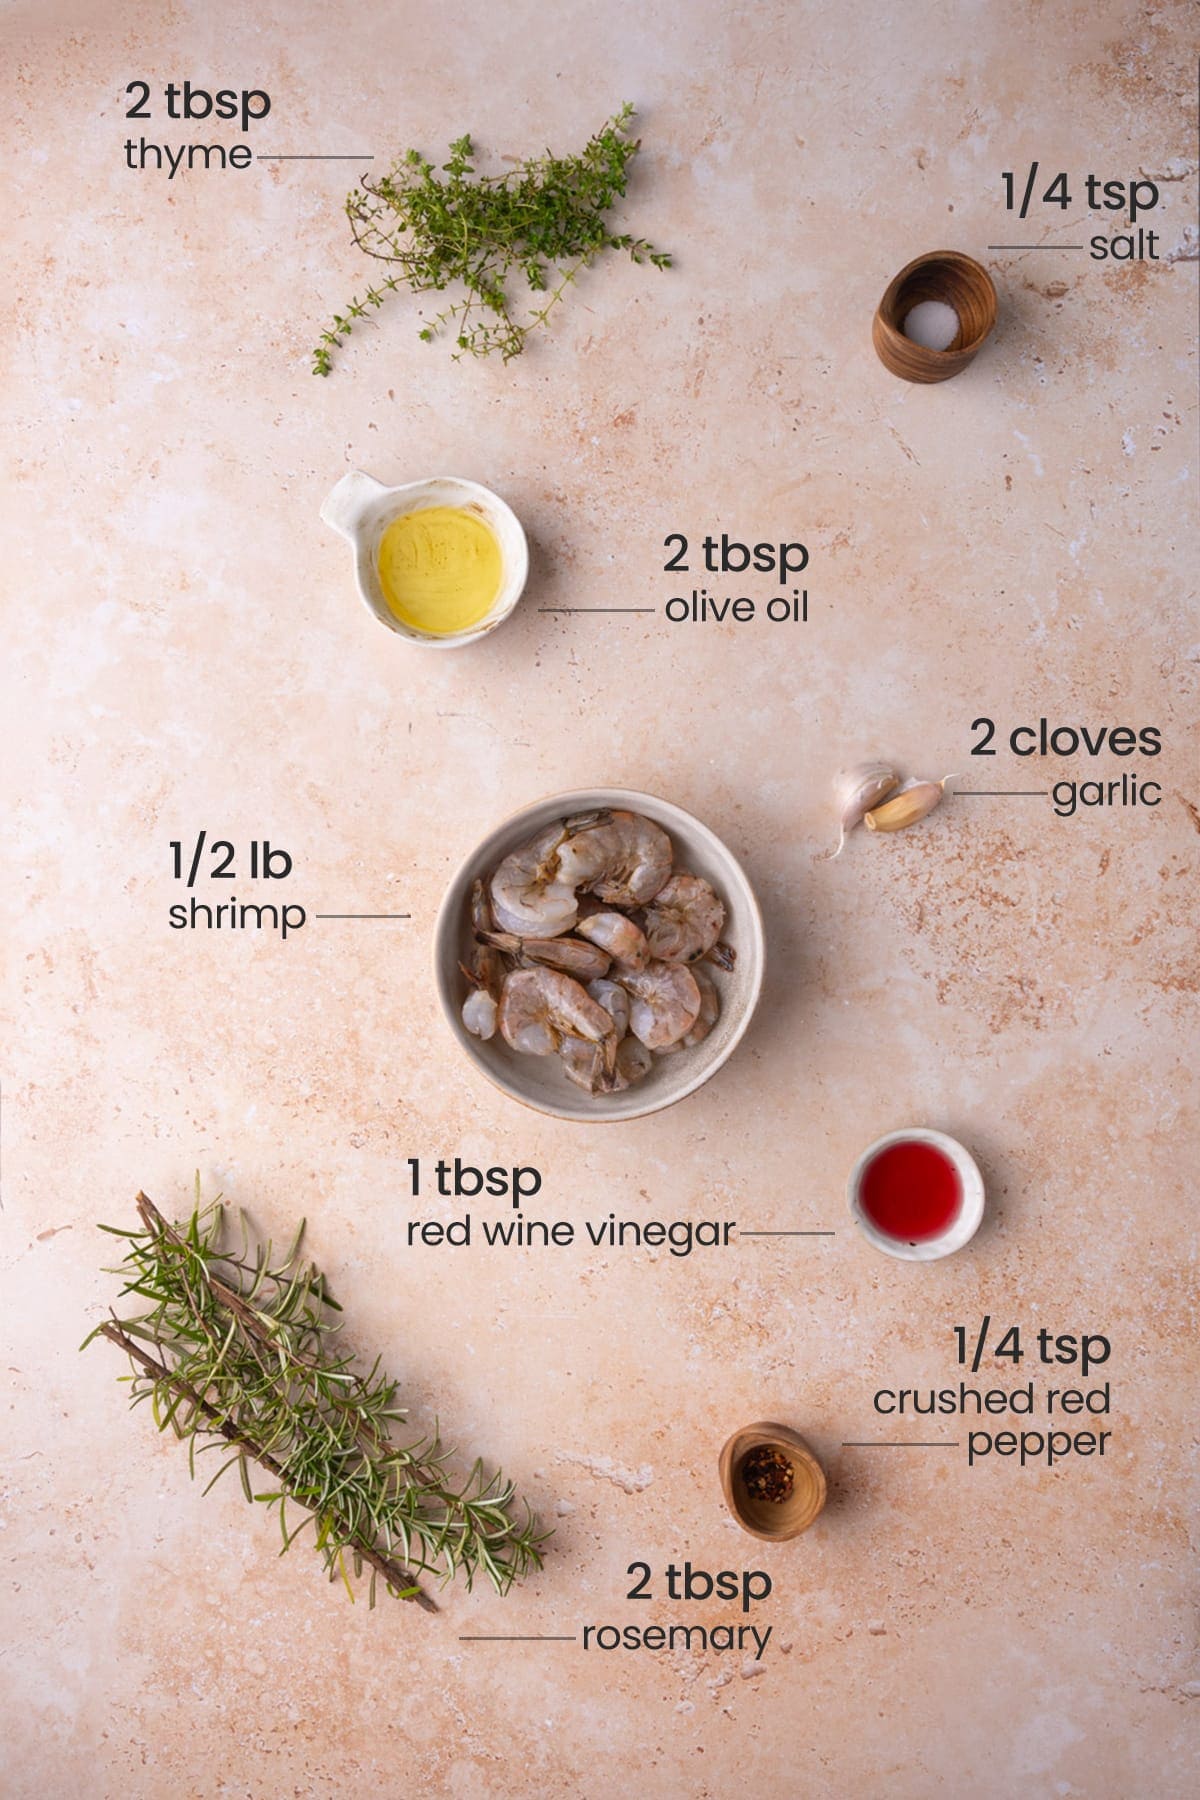 Overhead image of ingredients for herby shrimp polenta - thyme, salt, olive oil, garlic, shrimp, red wine vinegar, crushed red pepper, and rosemary.